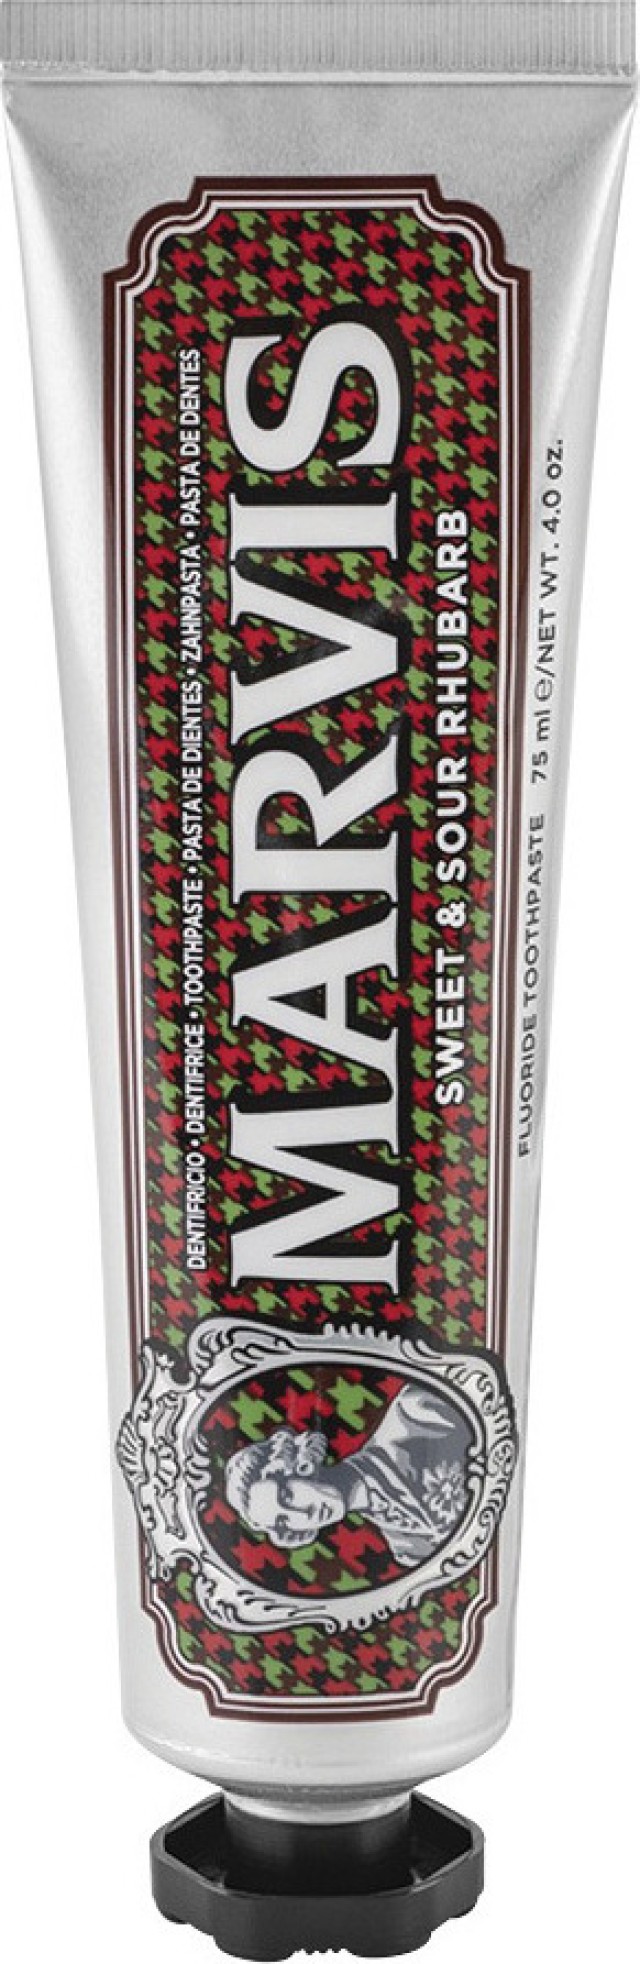 Marvis Sweet and Sour Rhubarb Mint Toothpaste Οδοντόκρεμα με Γλυκό & Ξινό Ραβέντι 75ml